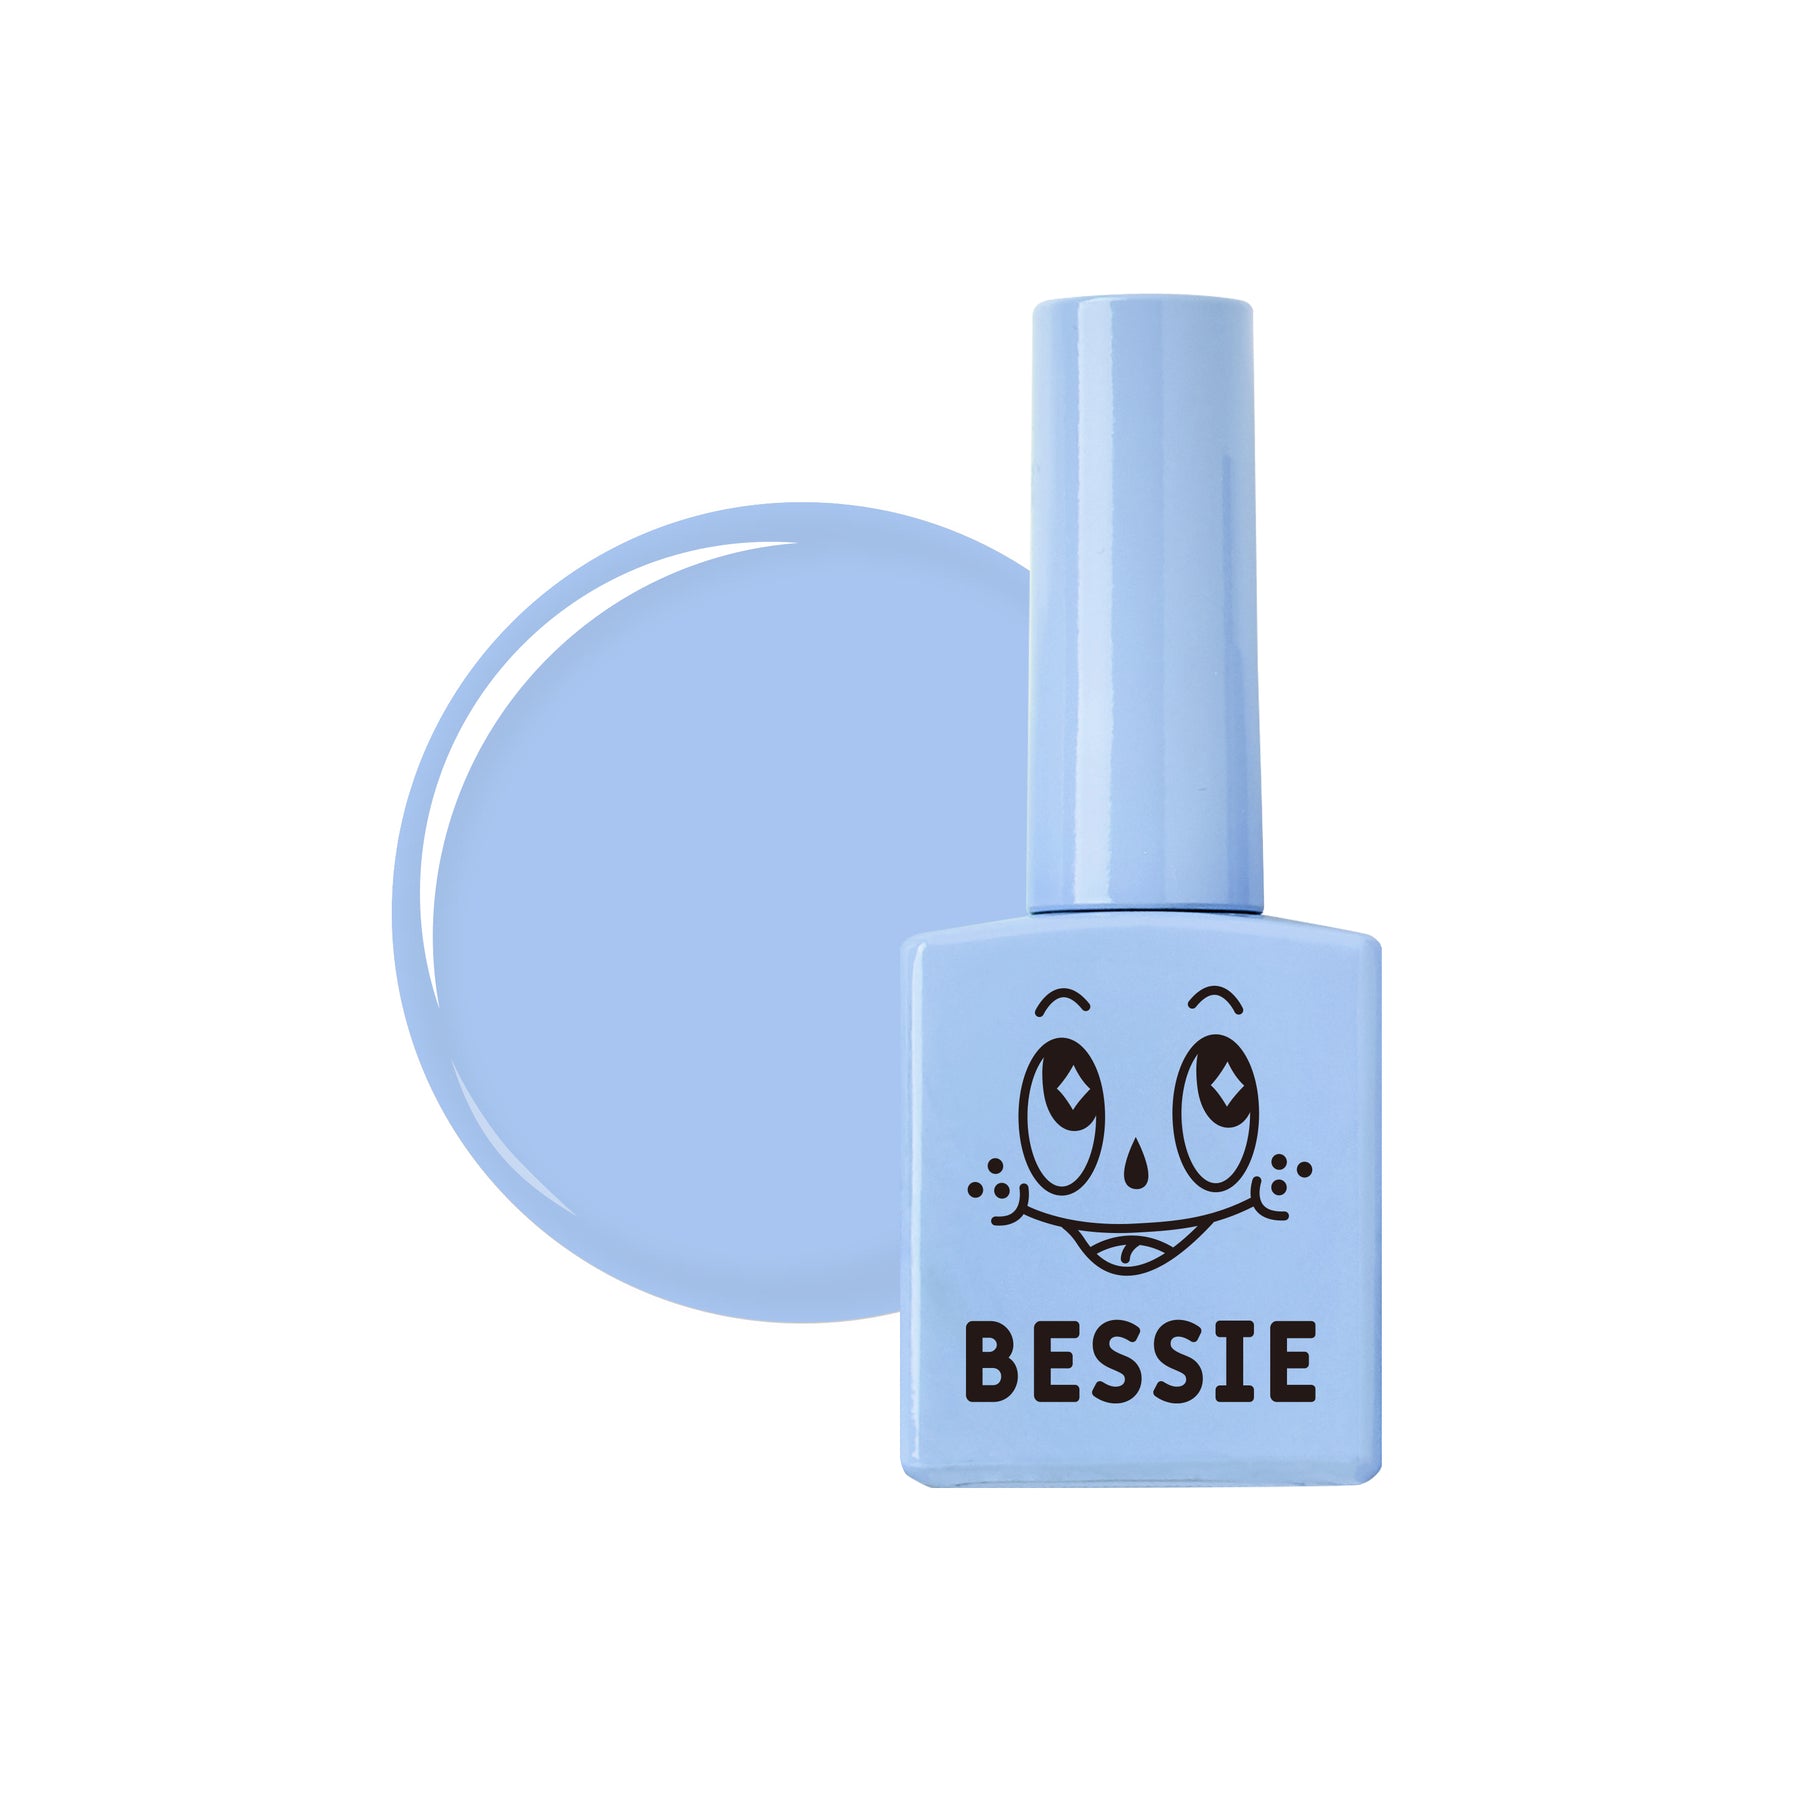 Geles de color individuales Bessie - 1ud